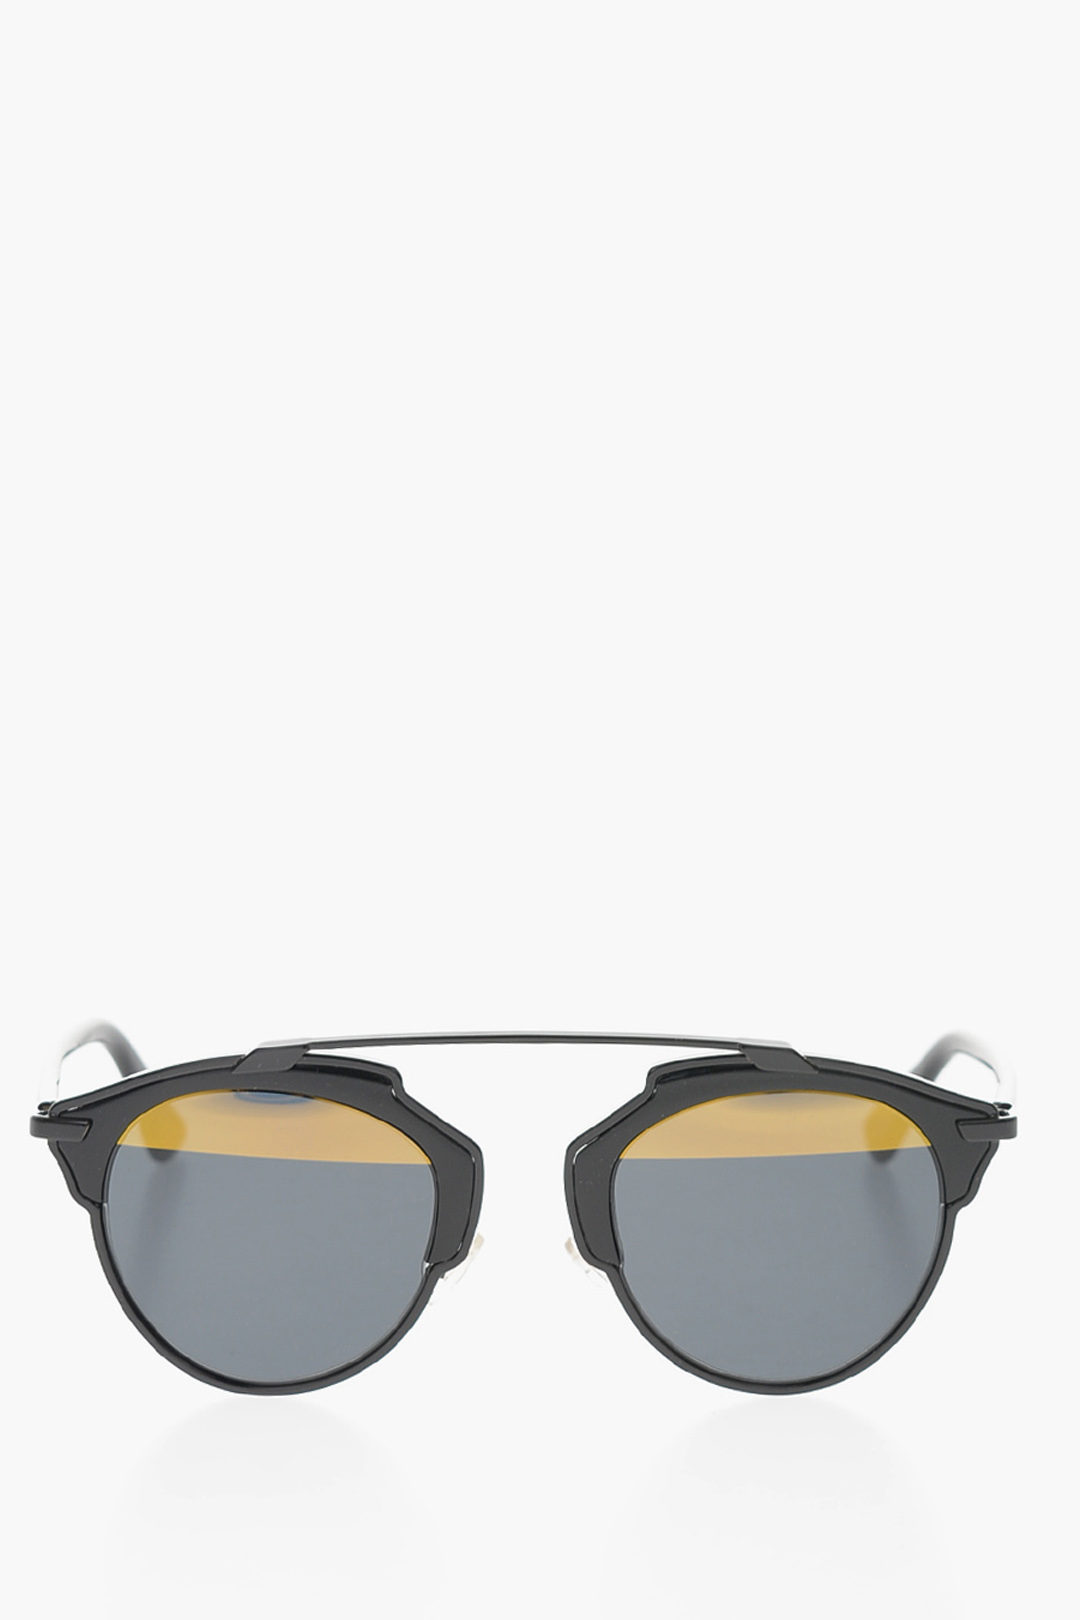 dior soreal round sunglasses